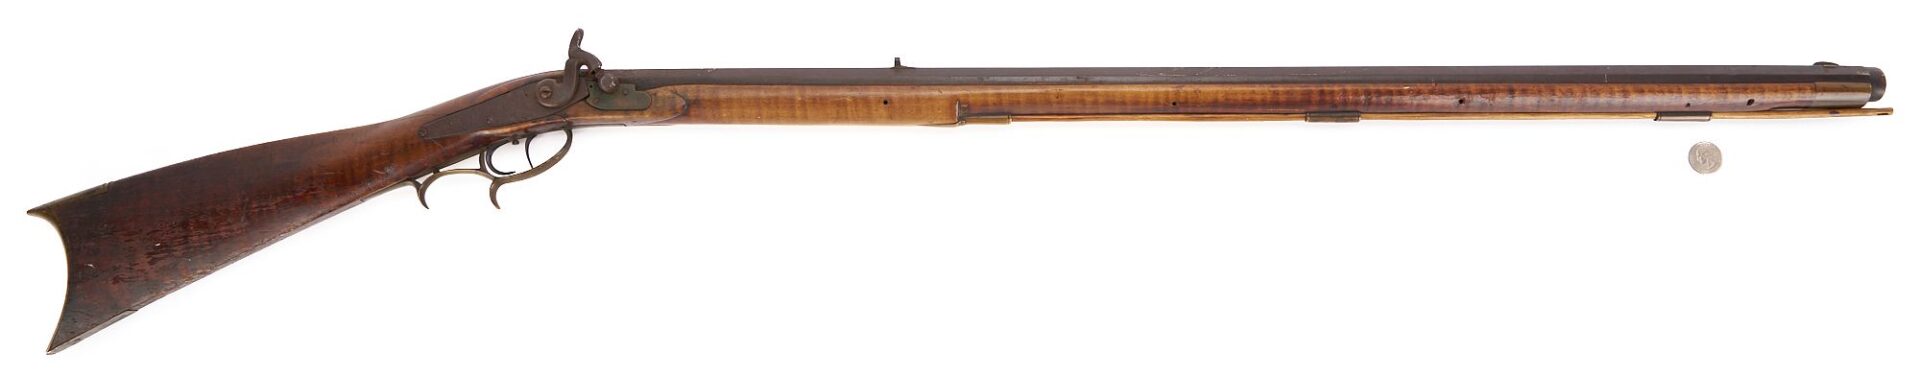 Lot 532: Ohio Percussion Long Rifle, P. Kane